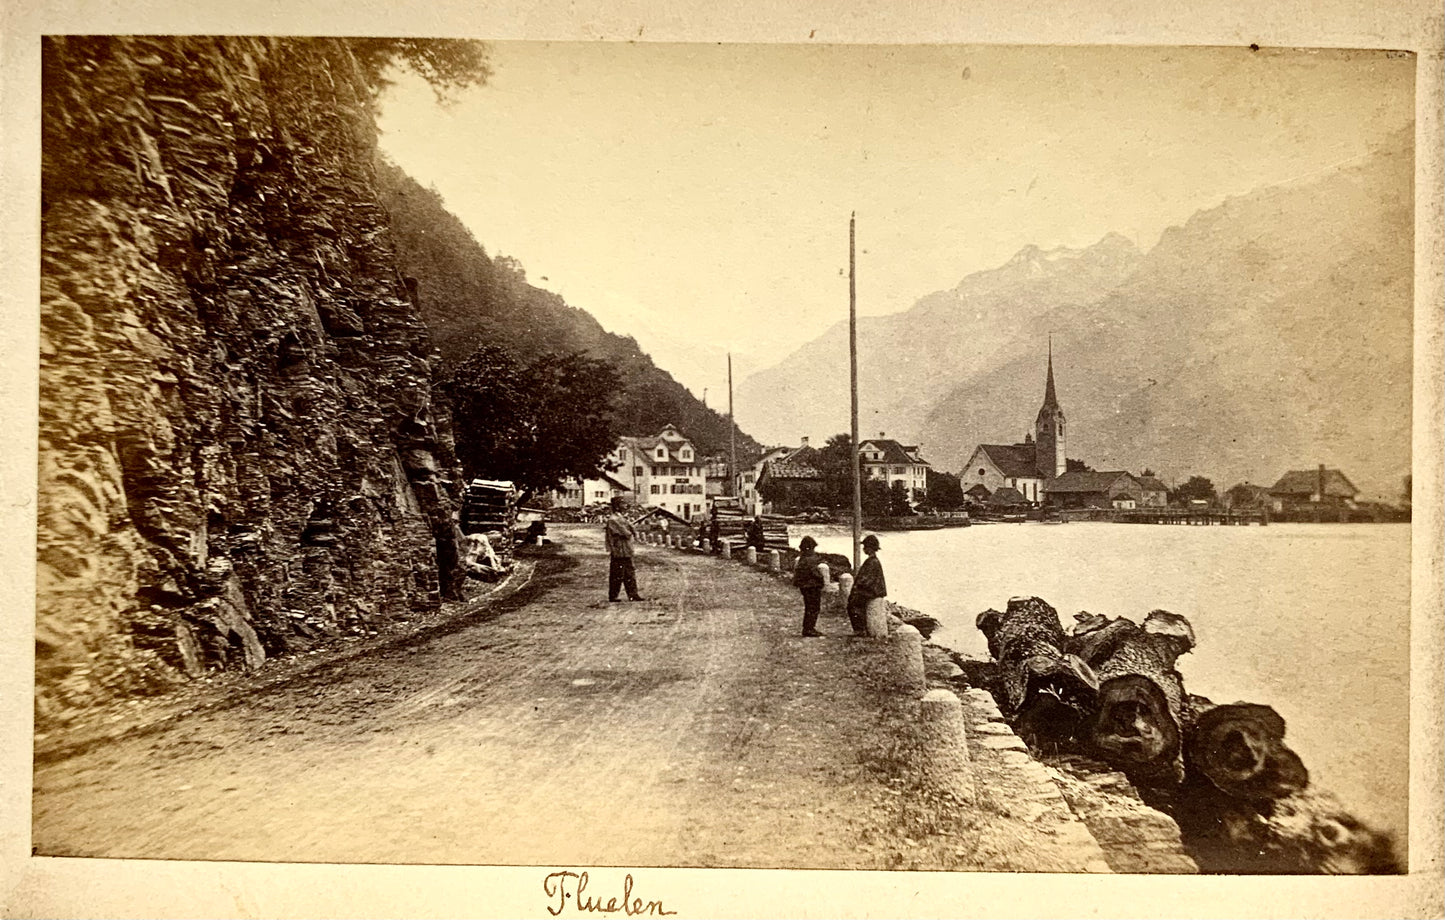 1860s Lake Lucerne, Souvenir Album, 10 very early albumen photos, Switzerland